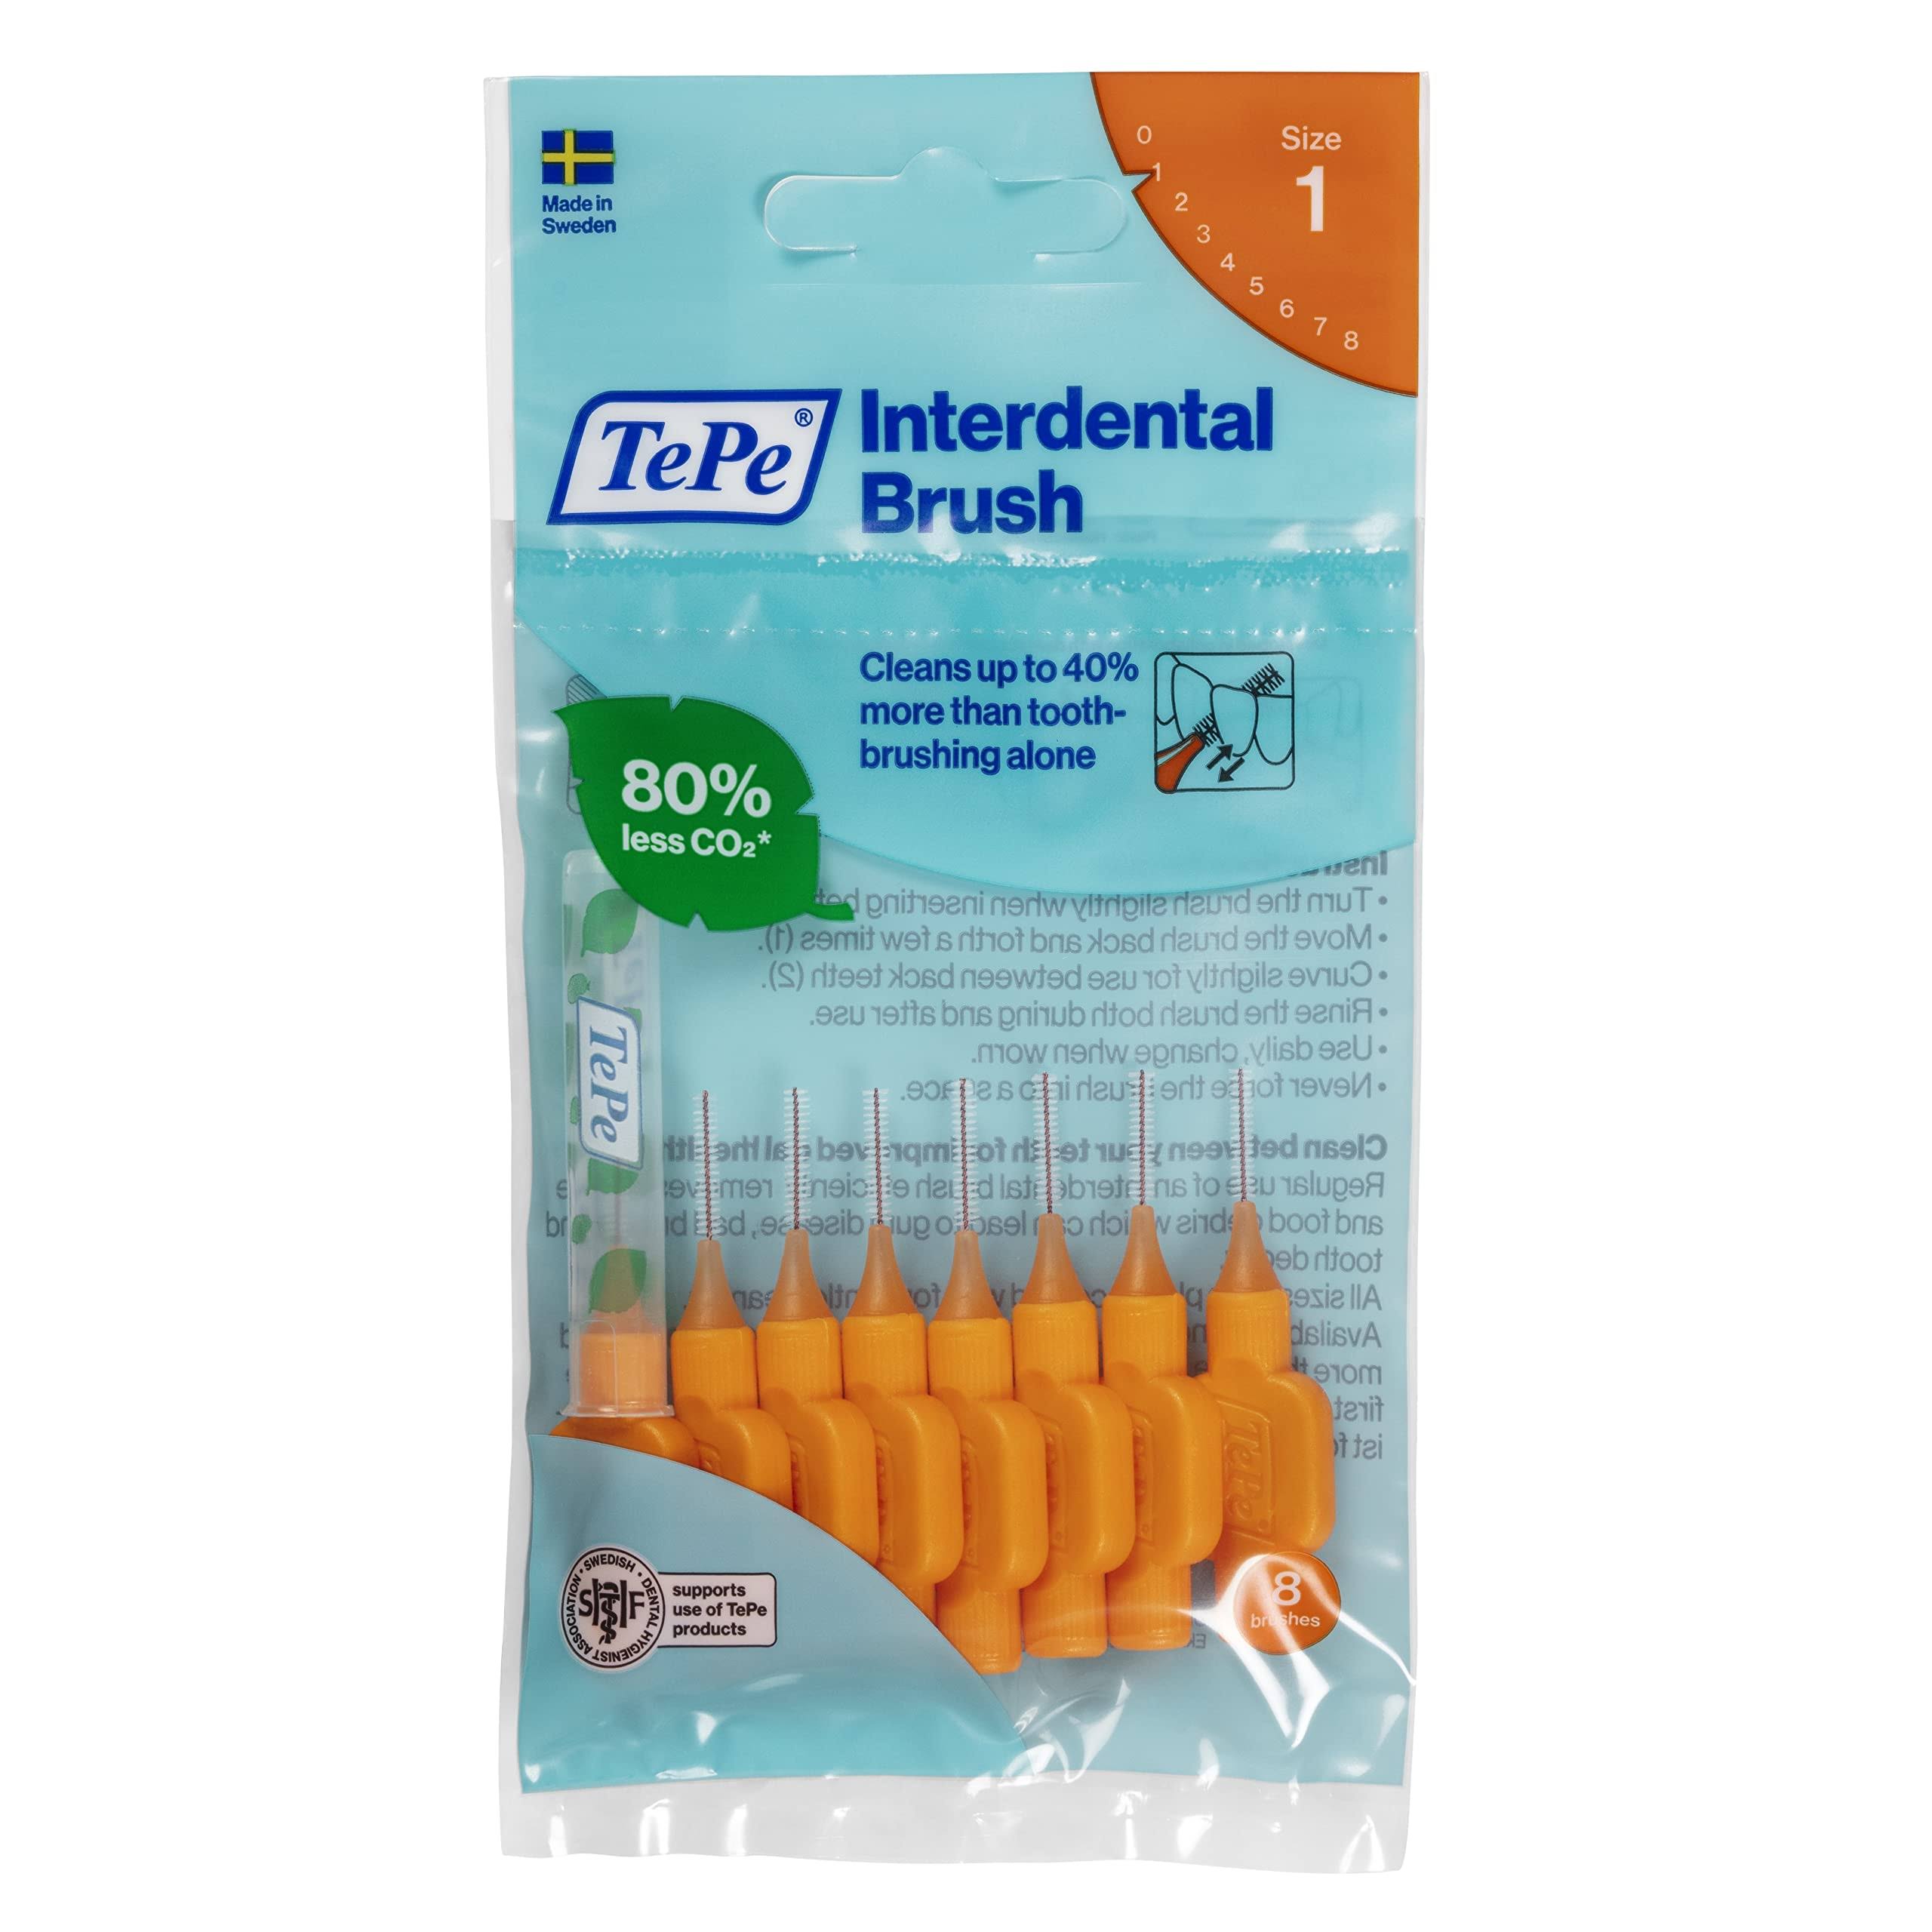 TePe Interdental Brush Original Orange 0.45mm size 1 - 8pcs